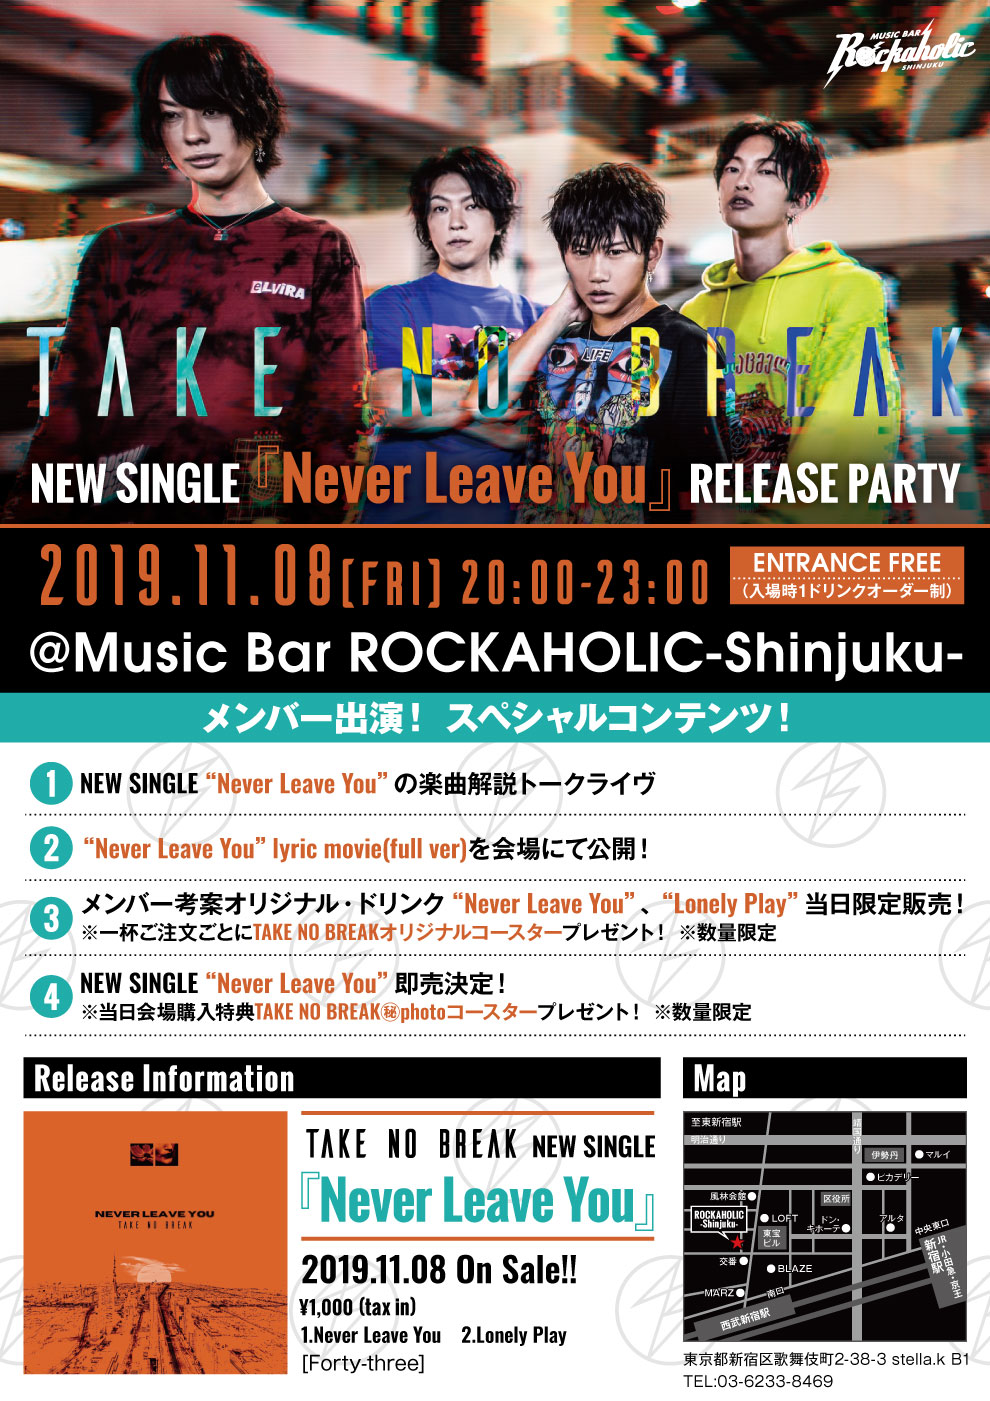 https://bar-rockaholic.jp/shinjuku/news/take_no_break.jpg